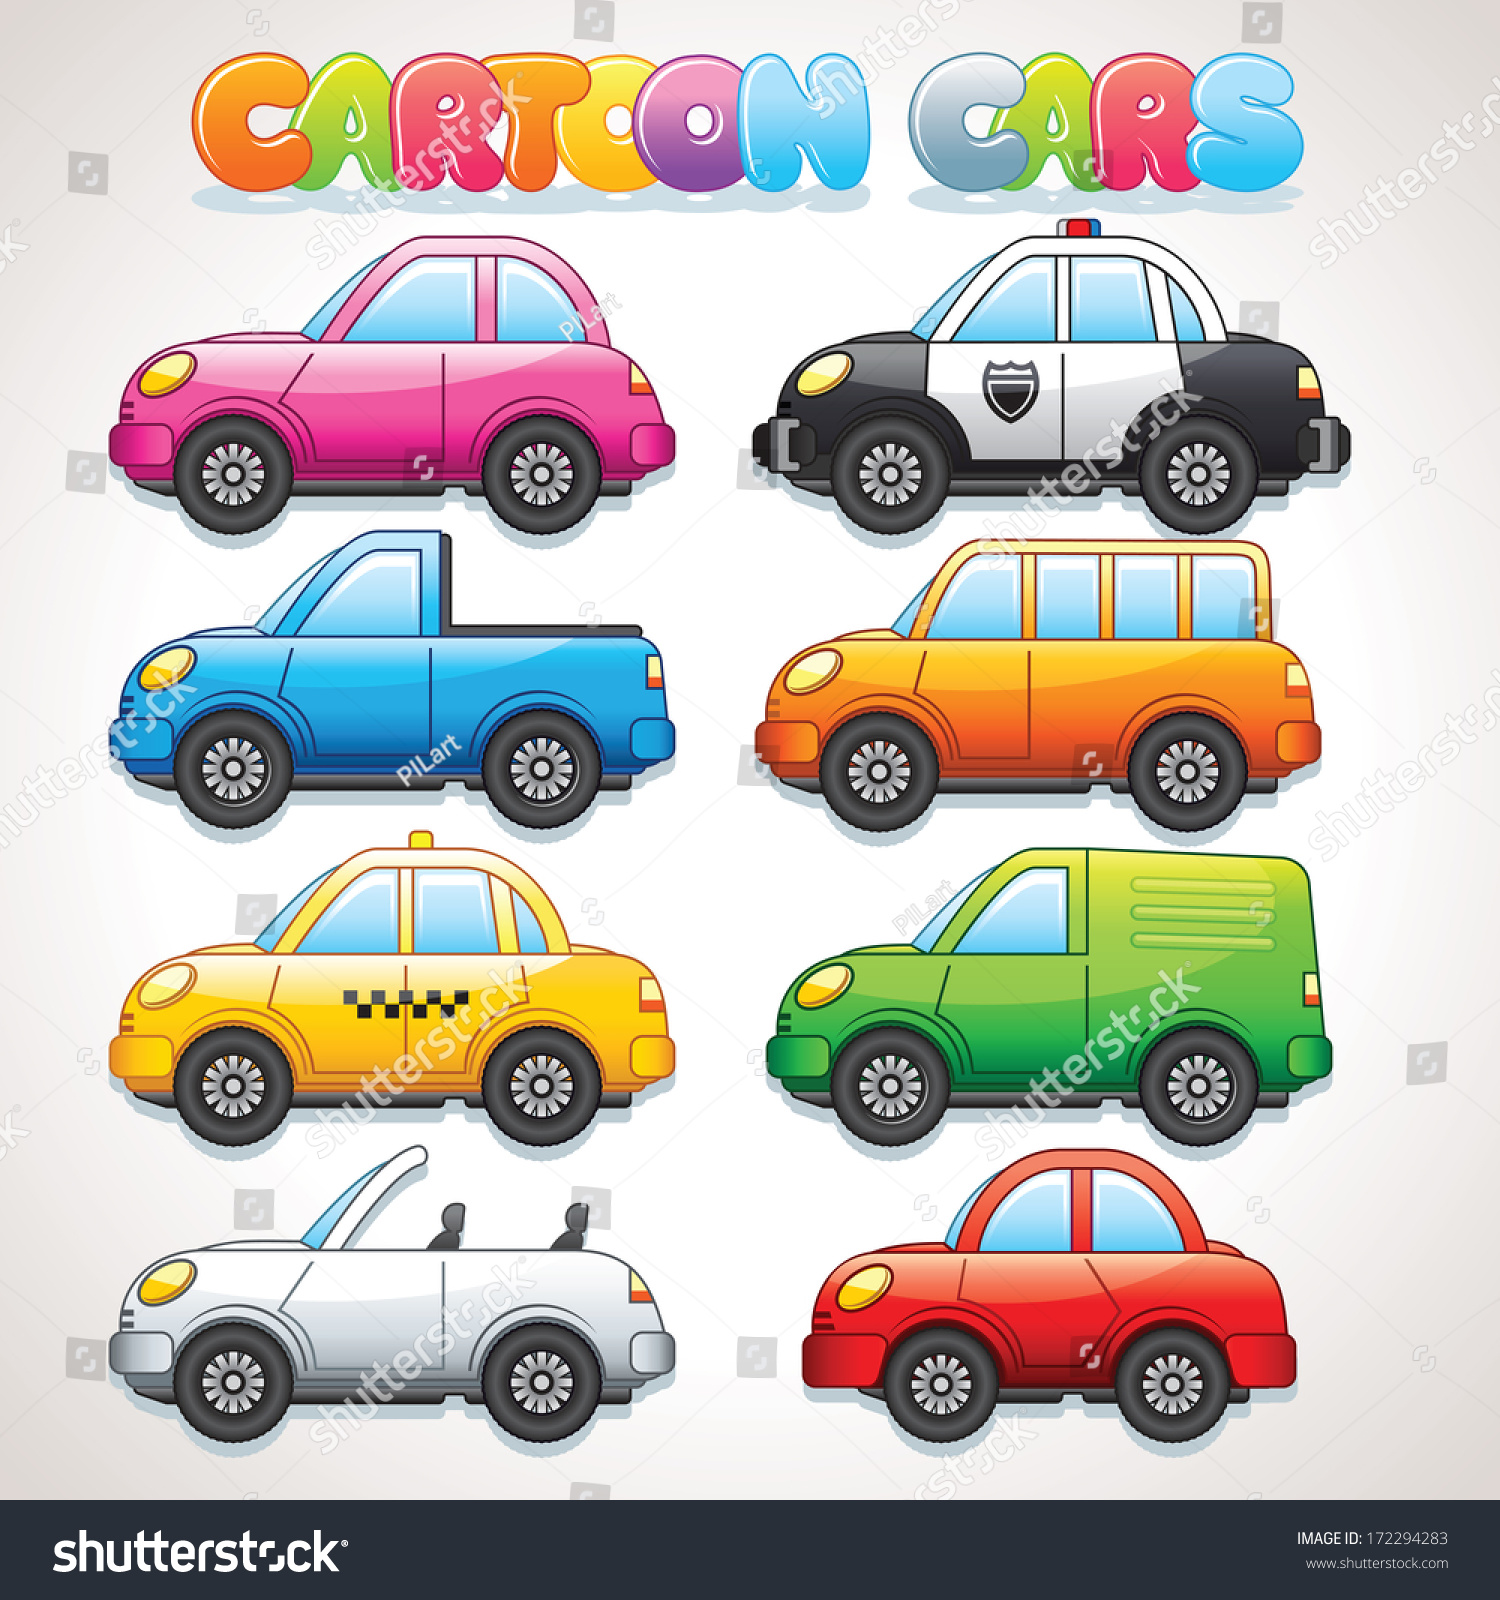 Cute Cartoon Cars Police Taxi Cabrio Stock Vector ...